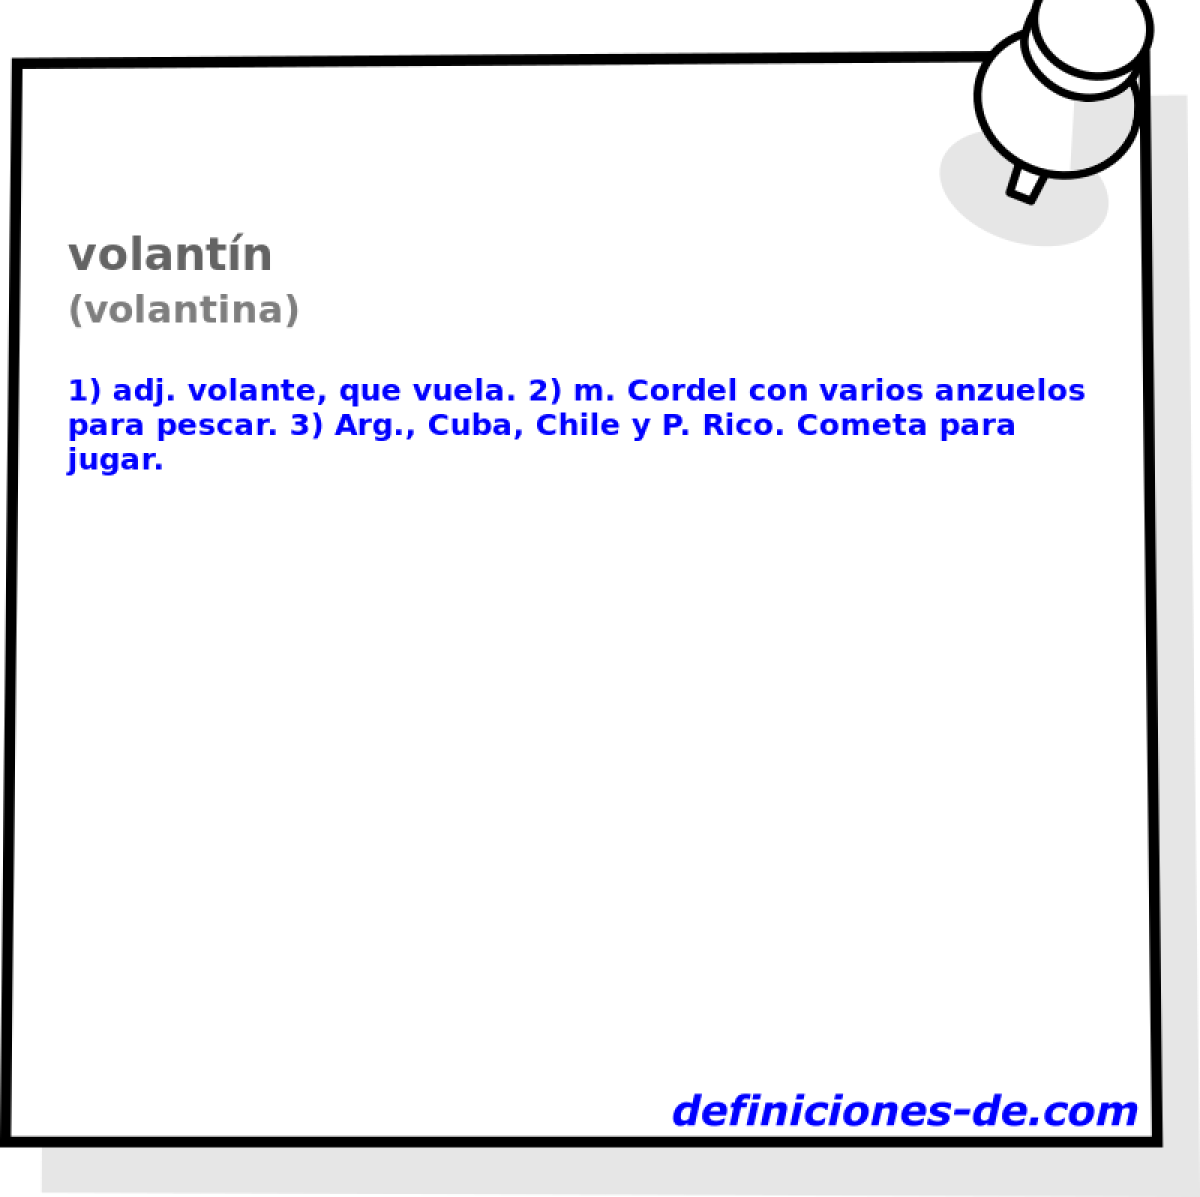 volantn (volantina)